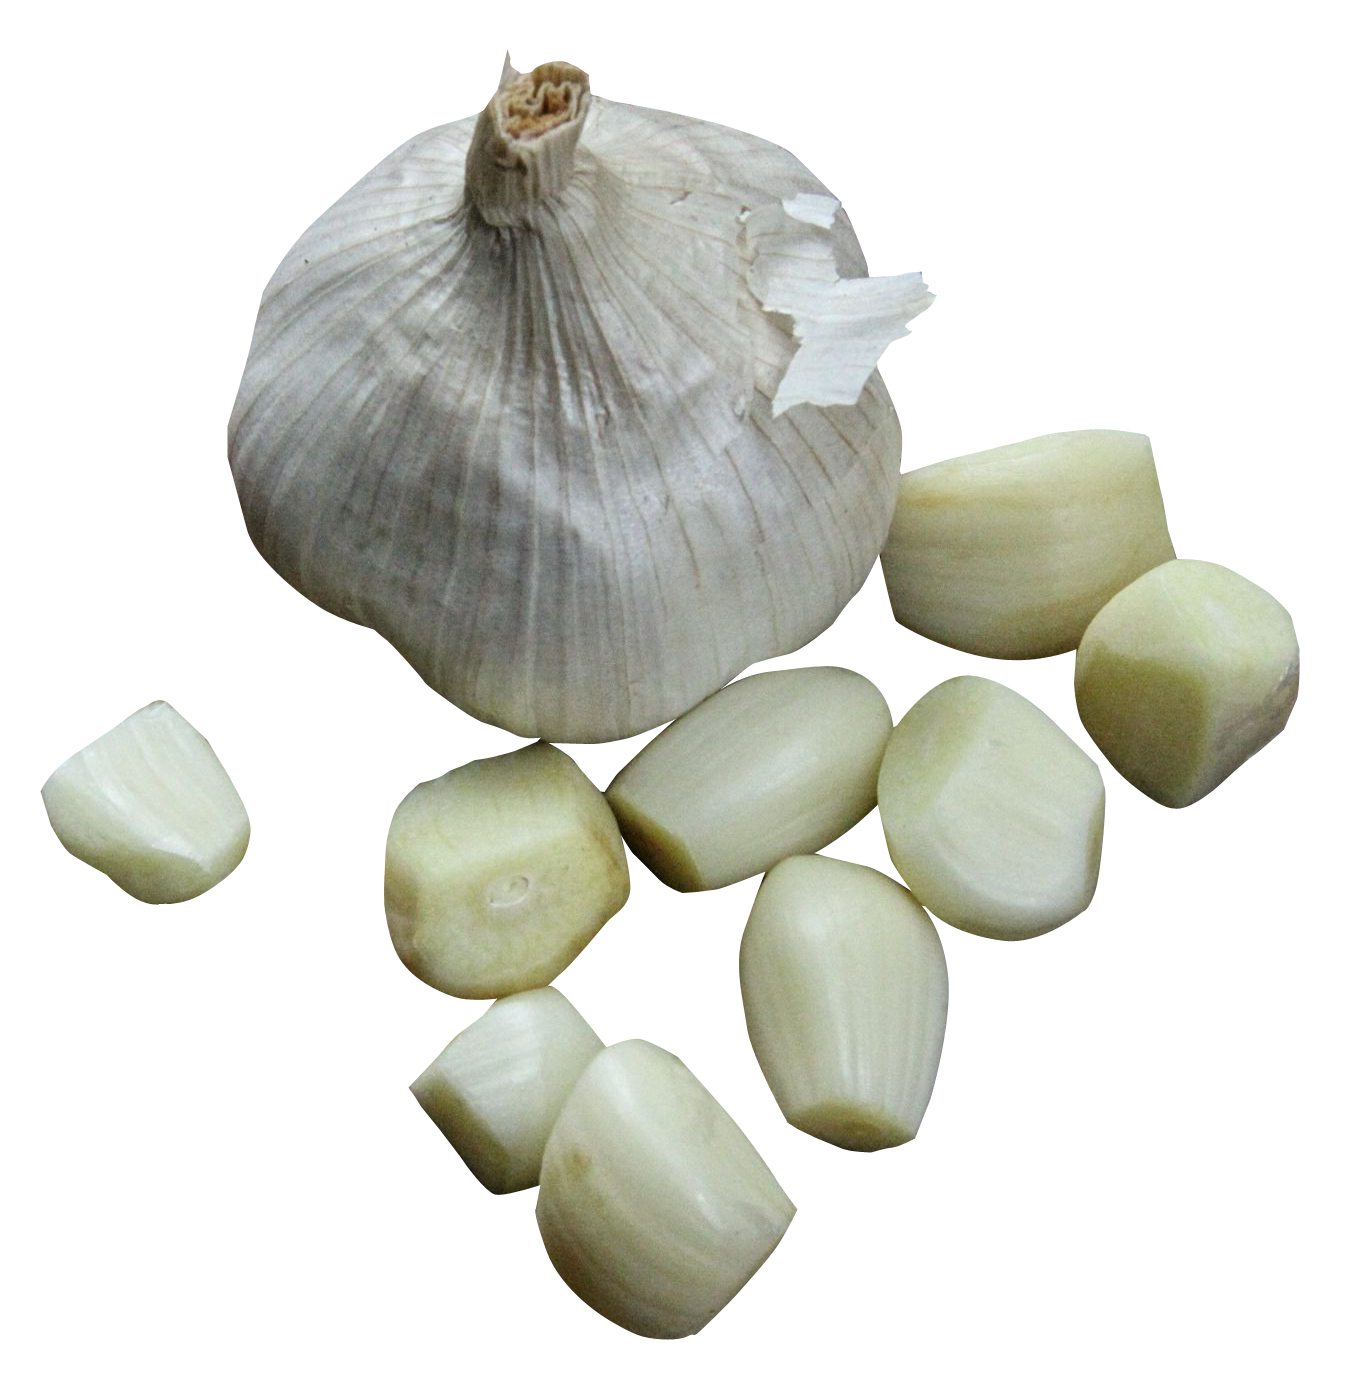 A Group Of Peeled Garlic